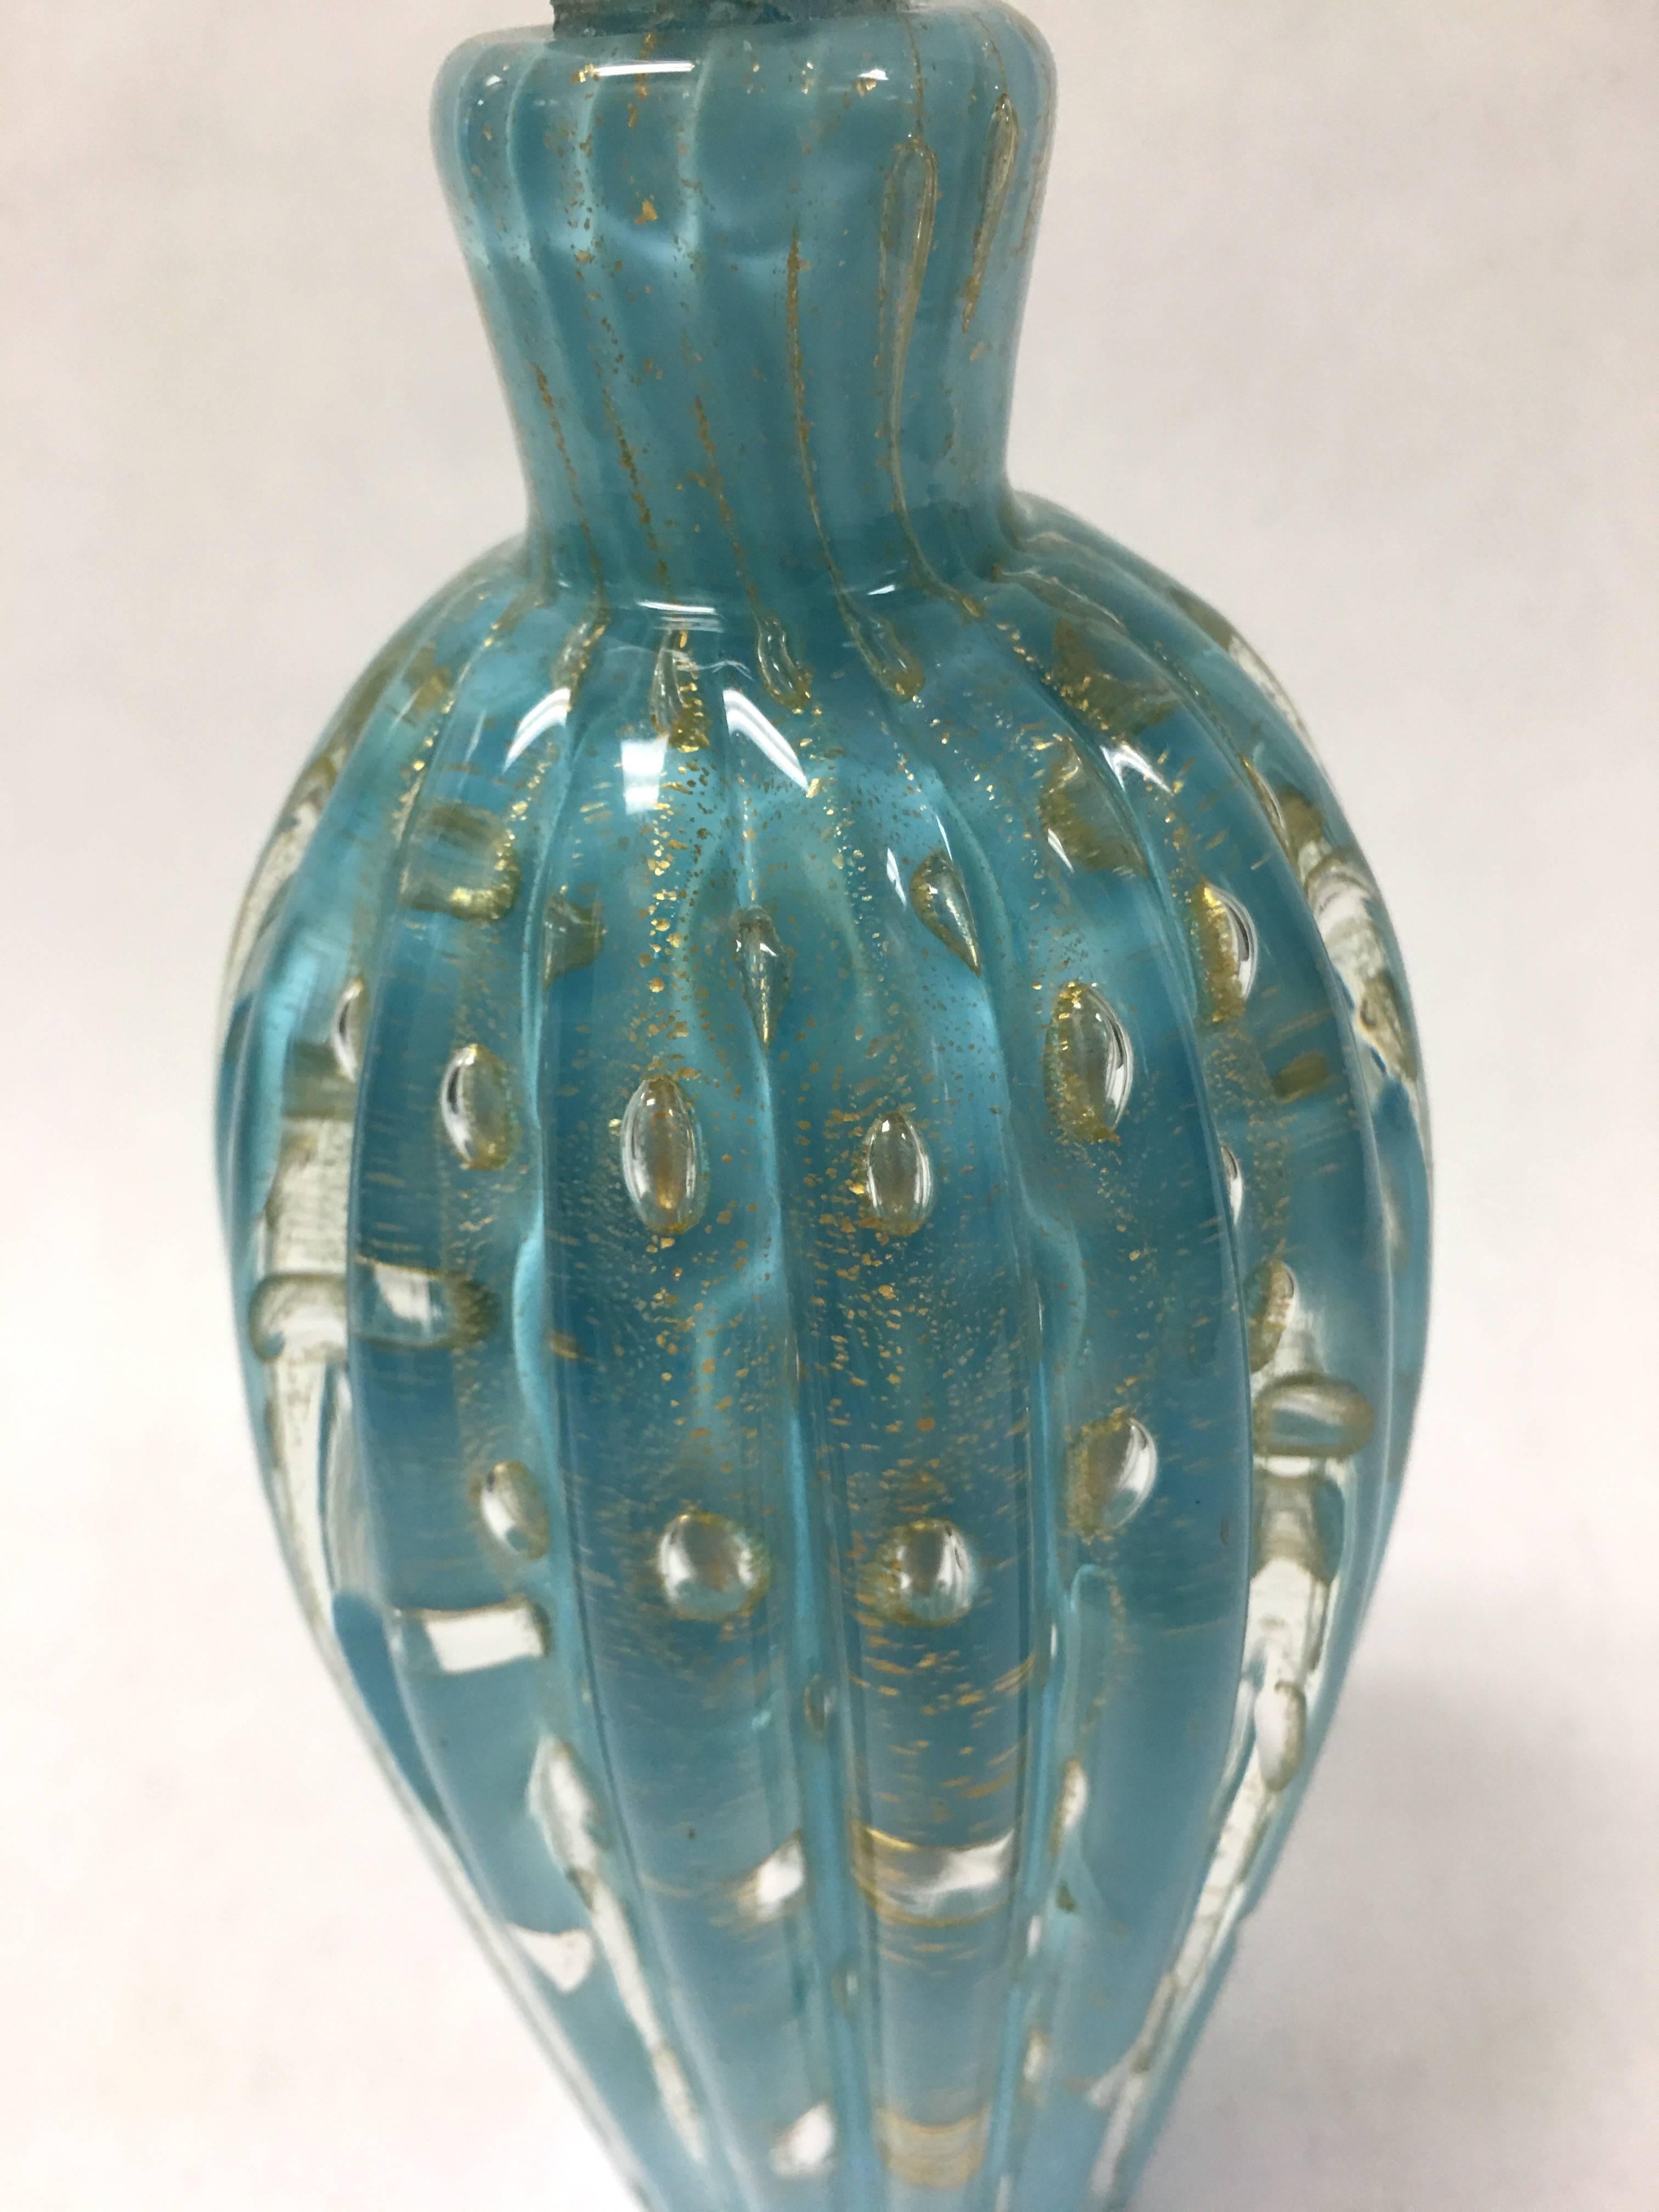 Hollywood Regency Murano Barbini Blue Glass Decanter or Perfume Bottle